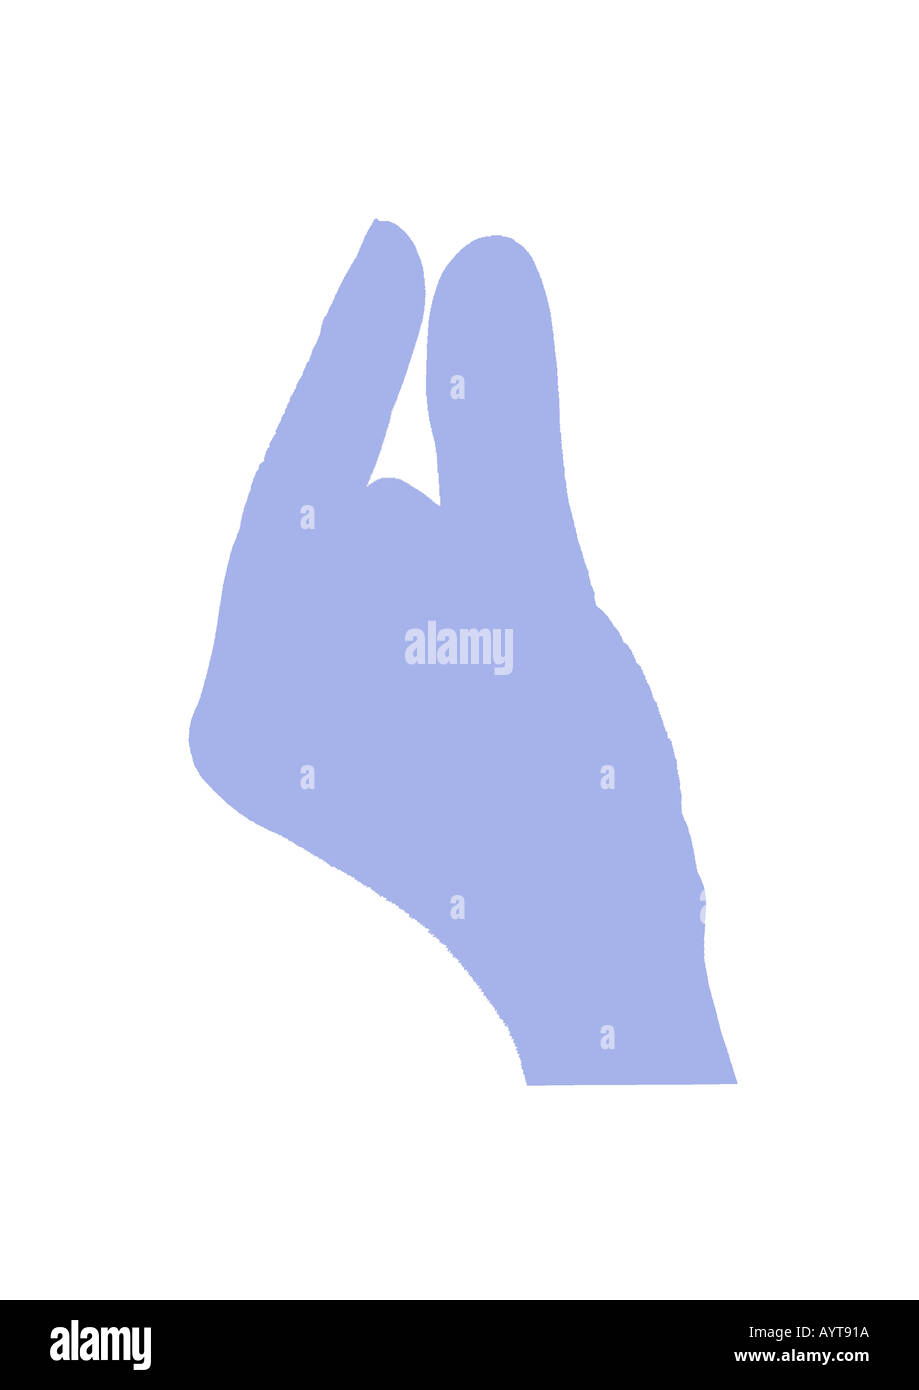 Silkscreen illustration of a hand Stock Photo